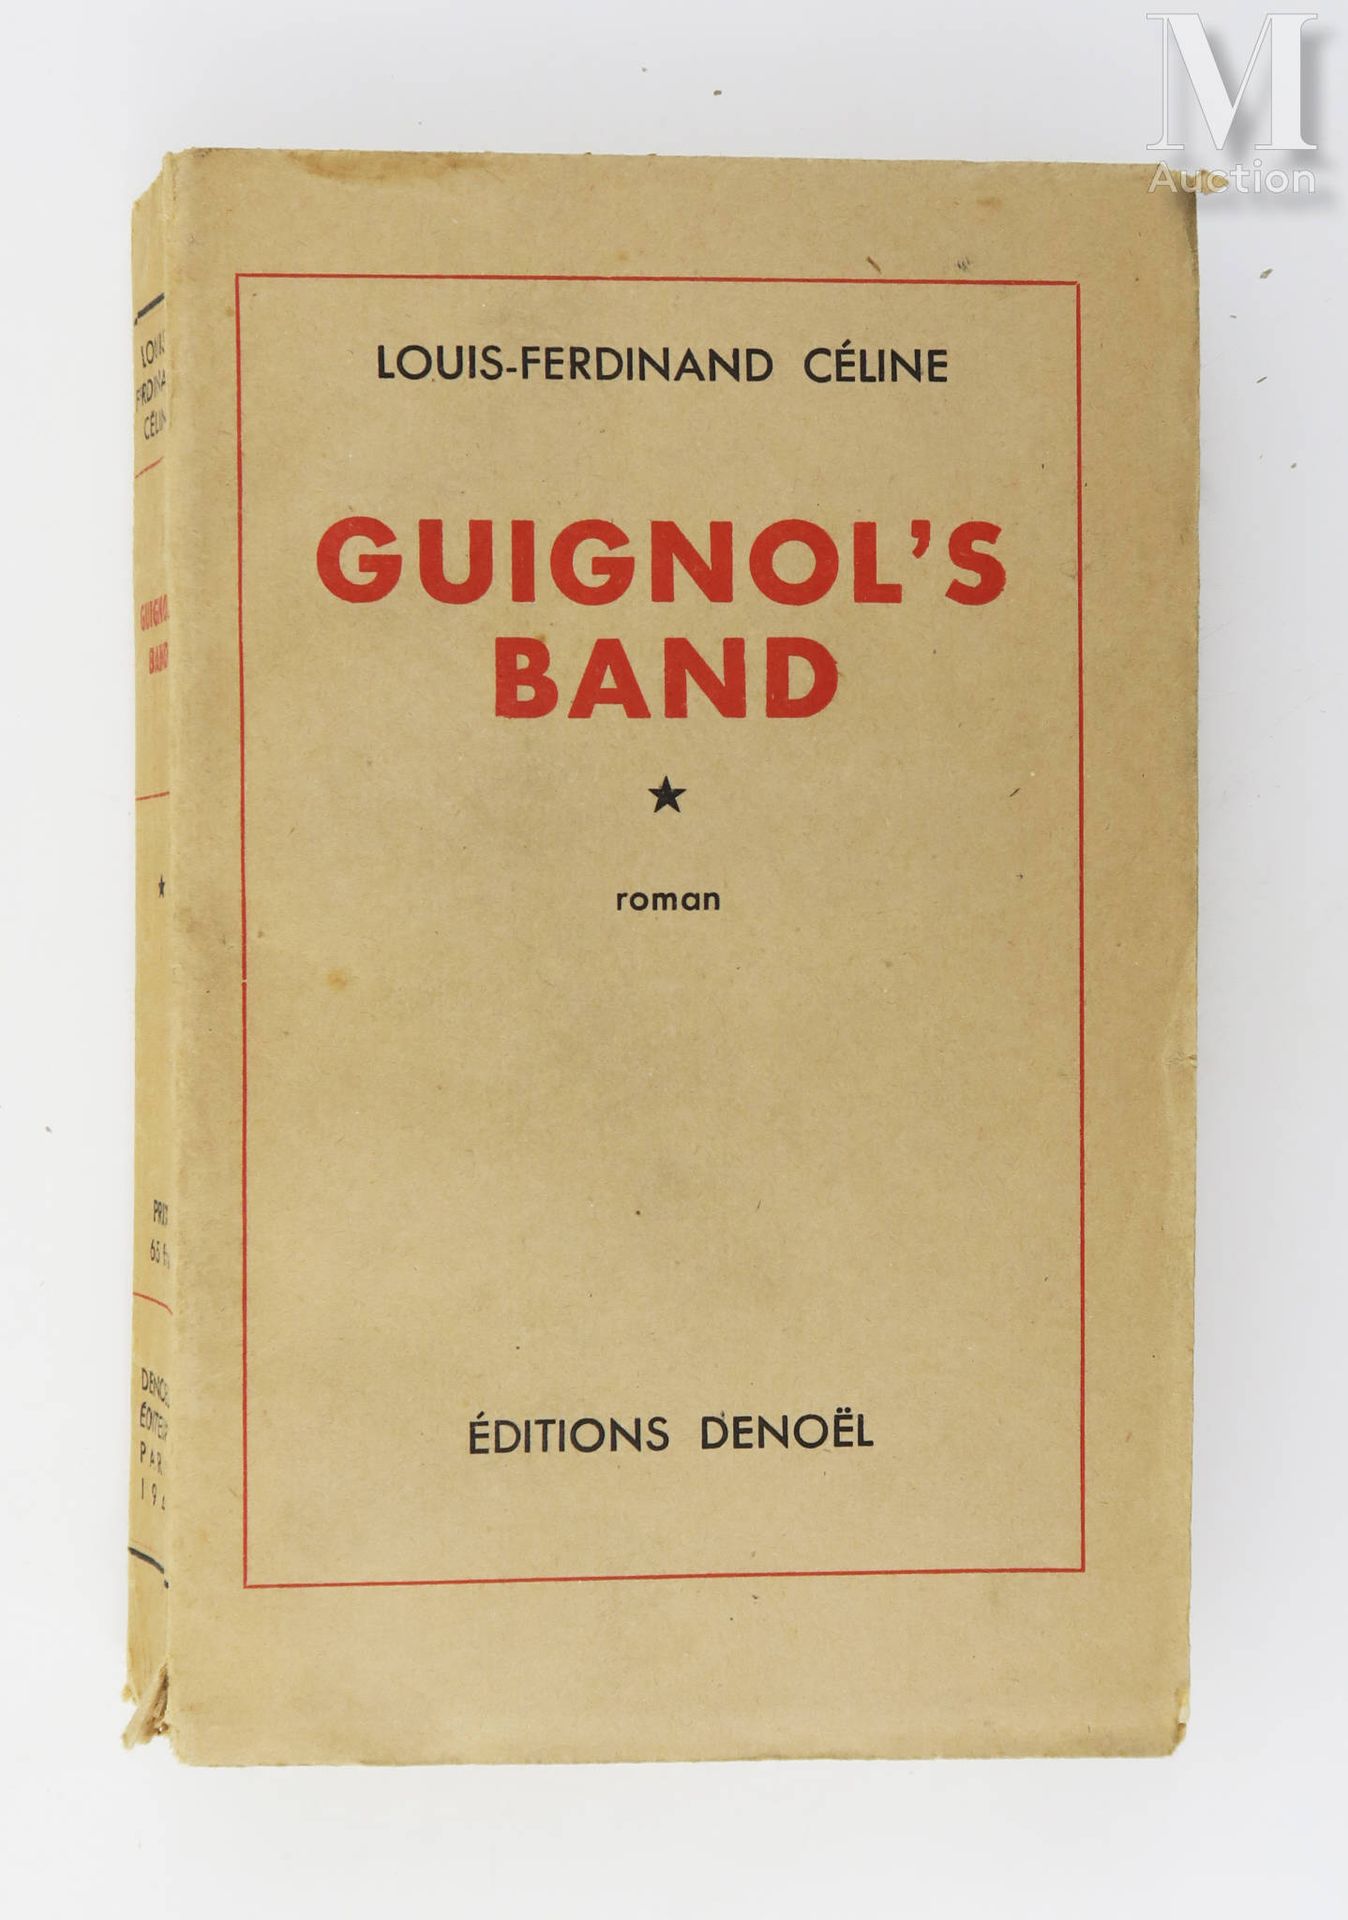 CÉLINE (Louis-Ferdinand). Guignol's band. Paris, Denoël, 1944.

In-8 broché, cou&hellip;